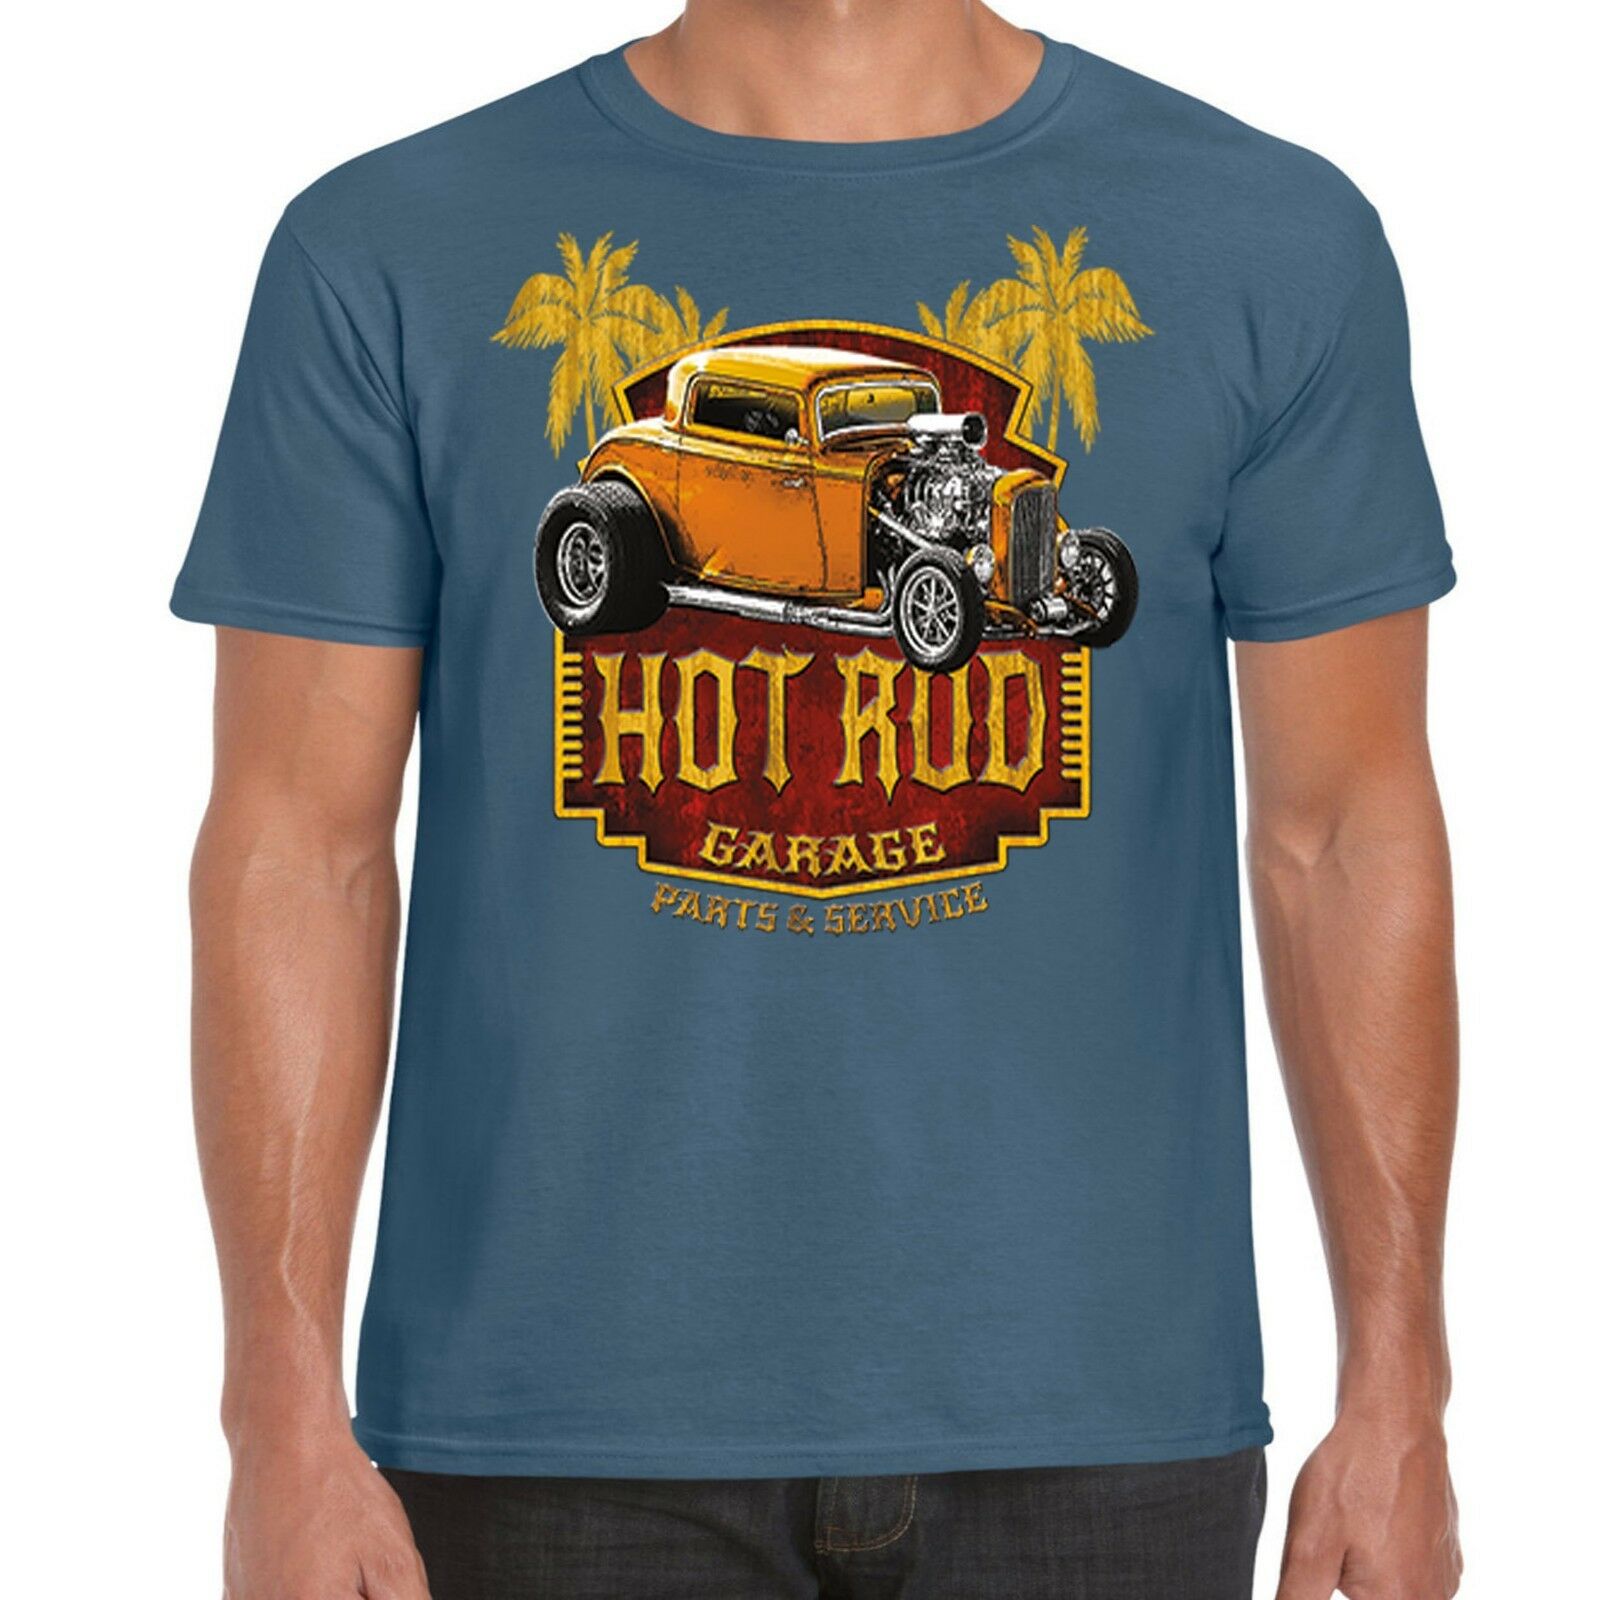 LA Hotrod T-Shirt Mens usa american classic vintage retro car rockabilly hot rod